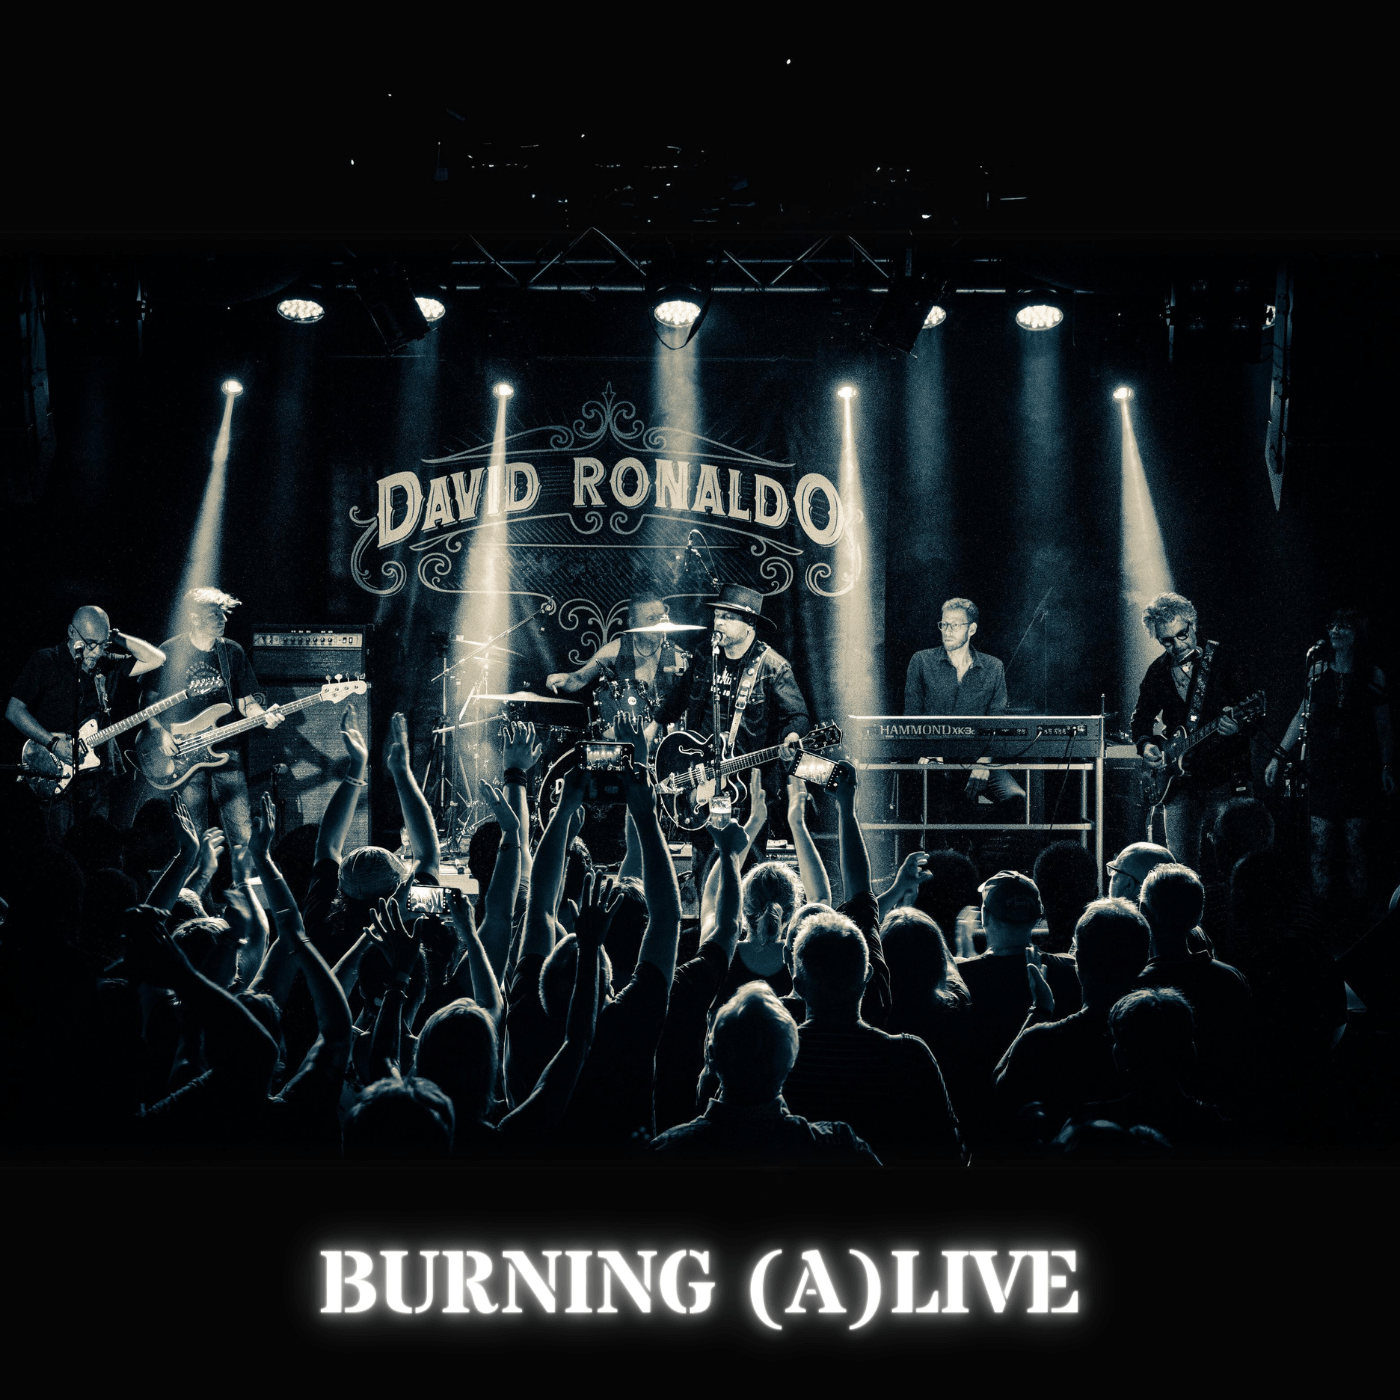 David Ronaldo & The Dice - Burning (A)Live